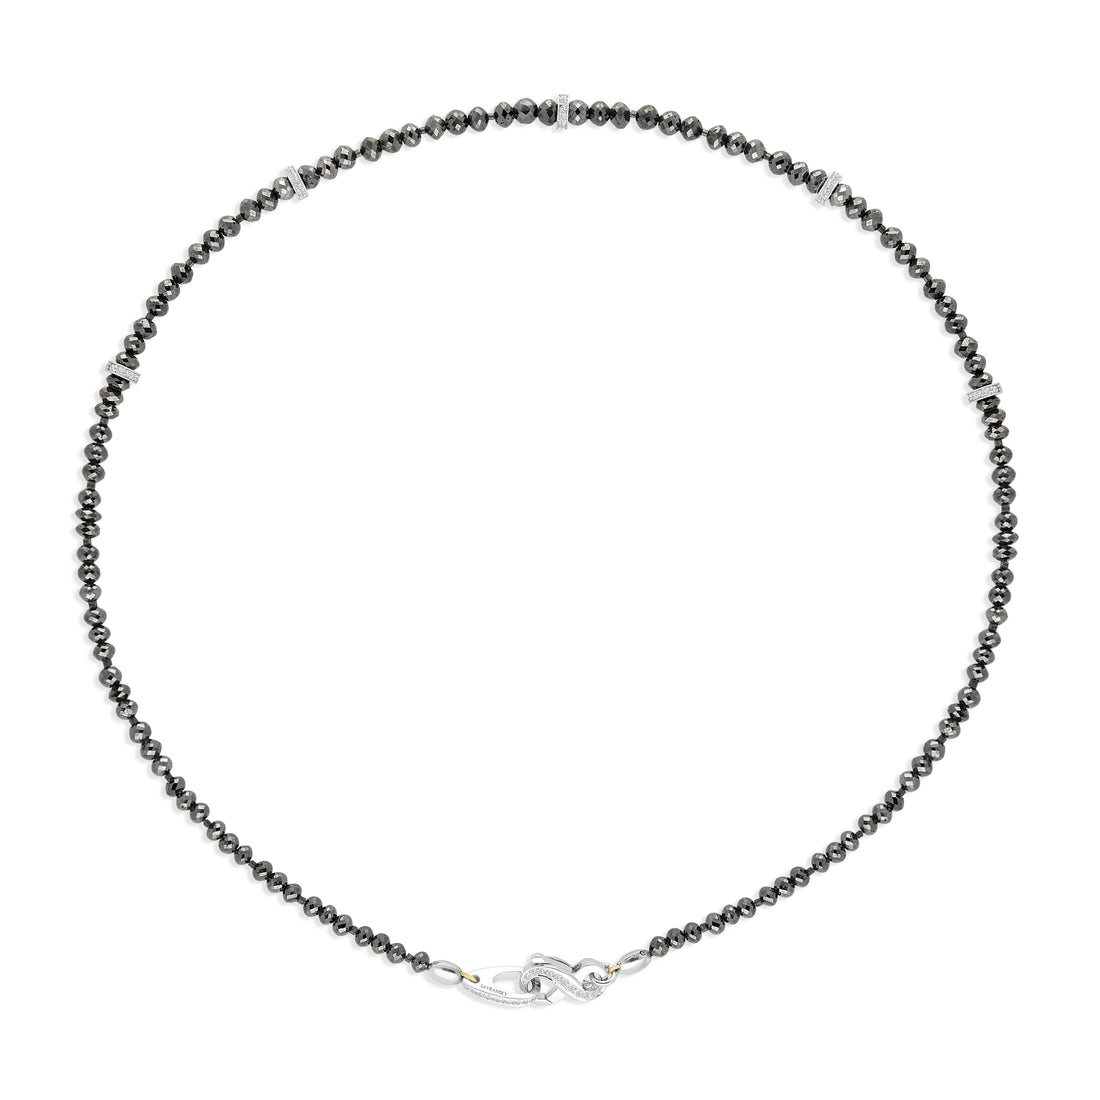 Black Diamond Beaded Necklace - 46.99 Carat